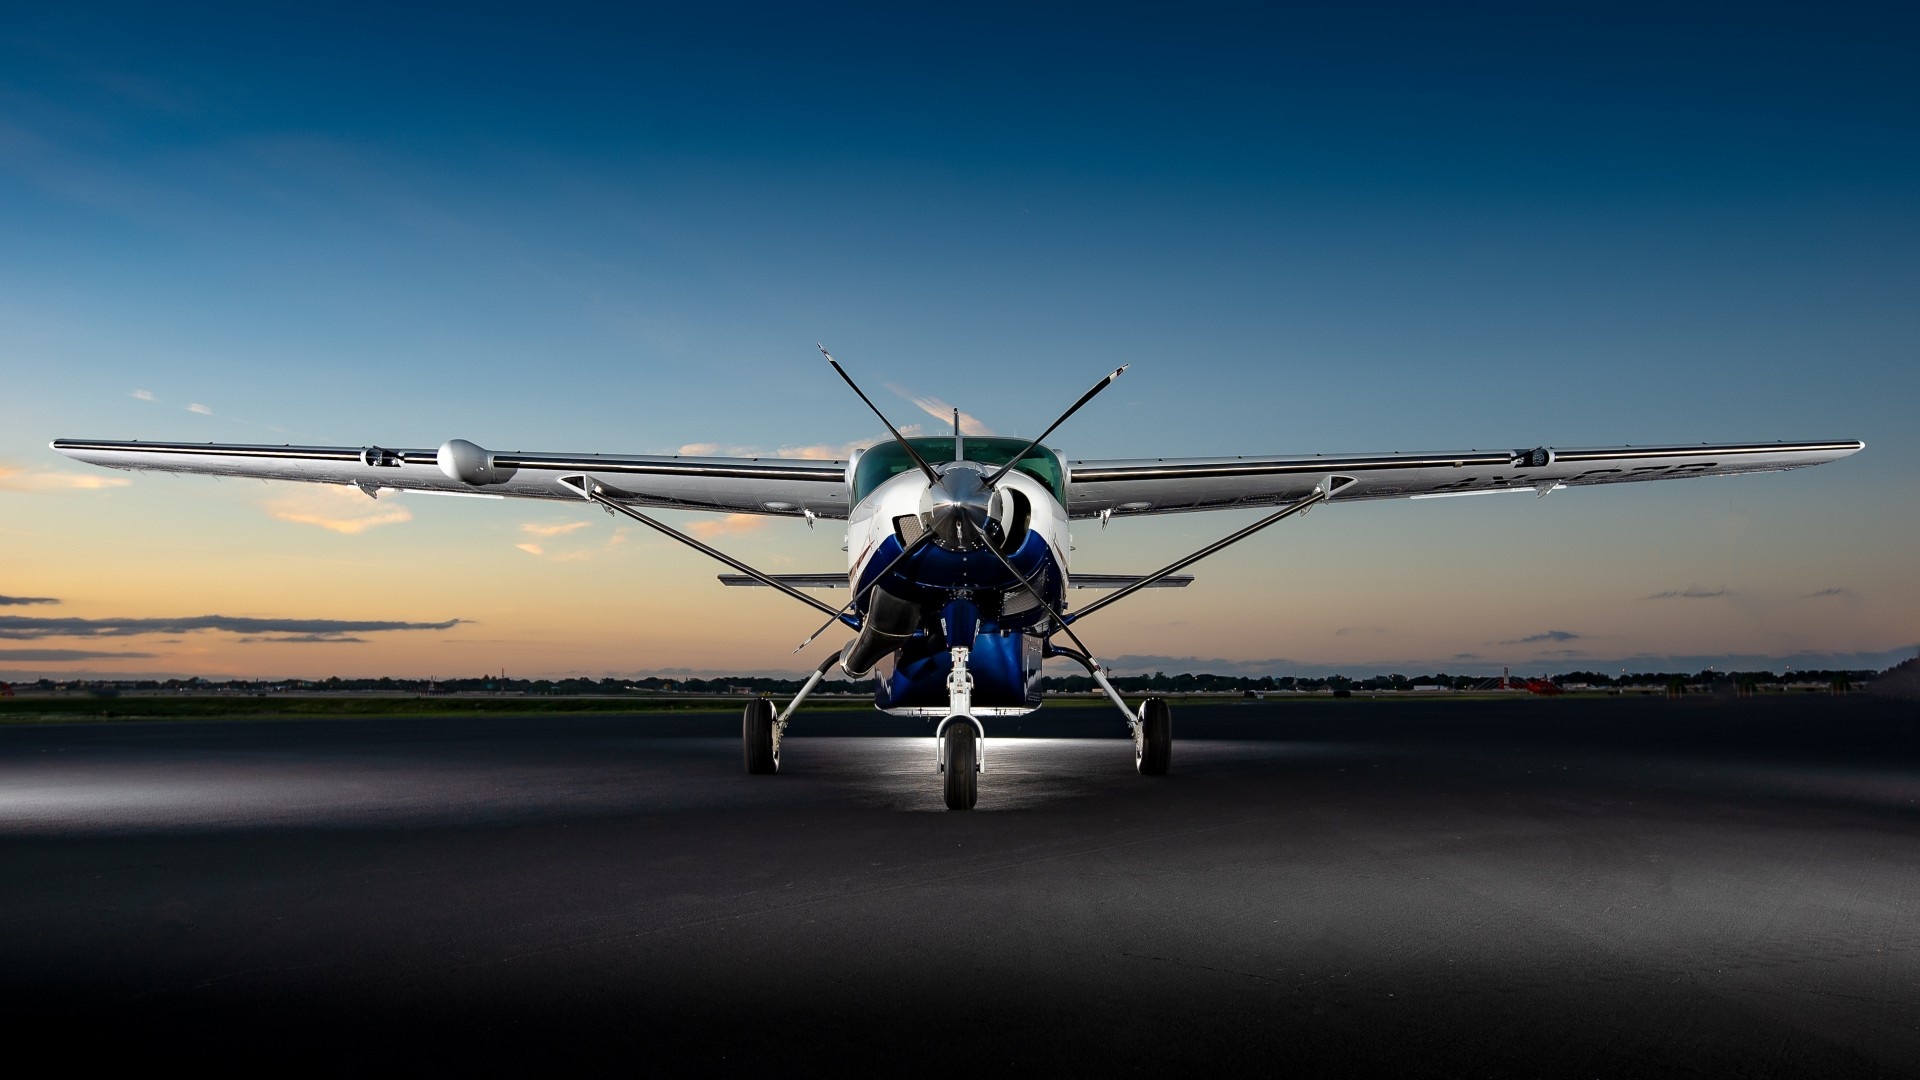 2018 Cessna Grand Caravan EX for sale 1920x1080